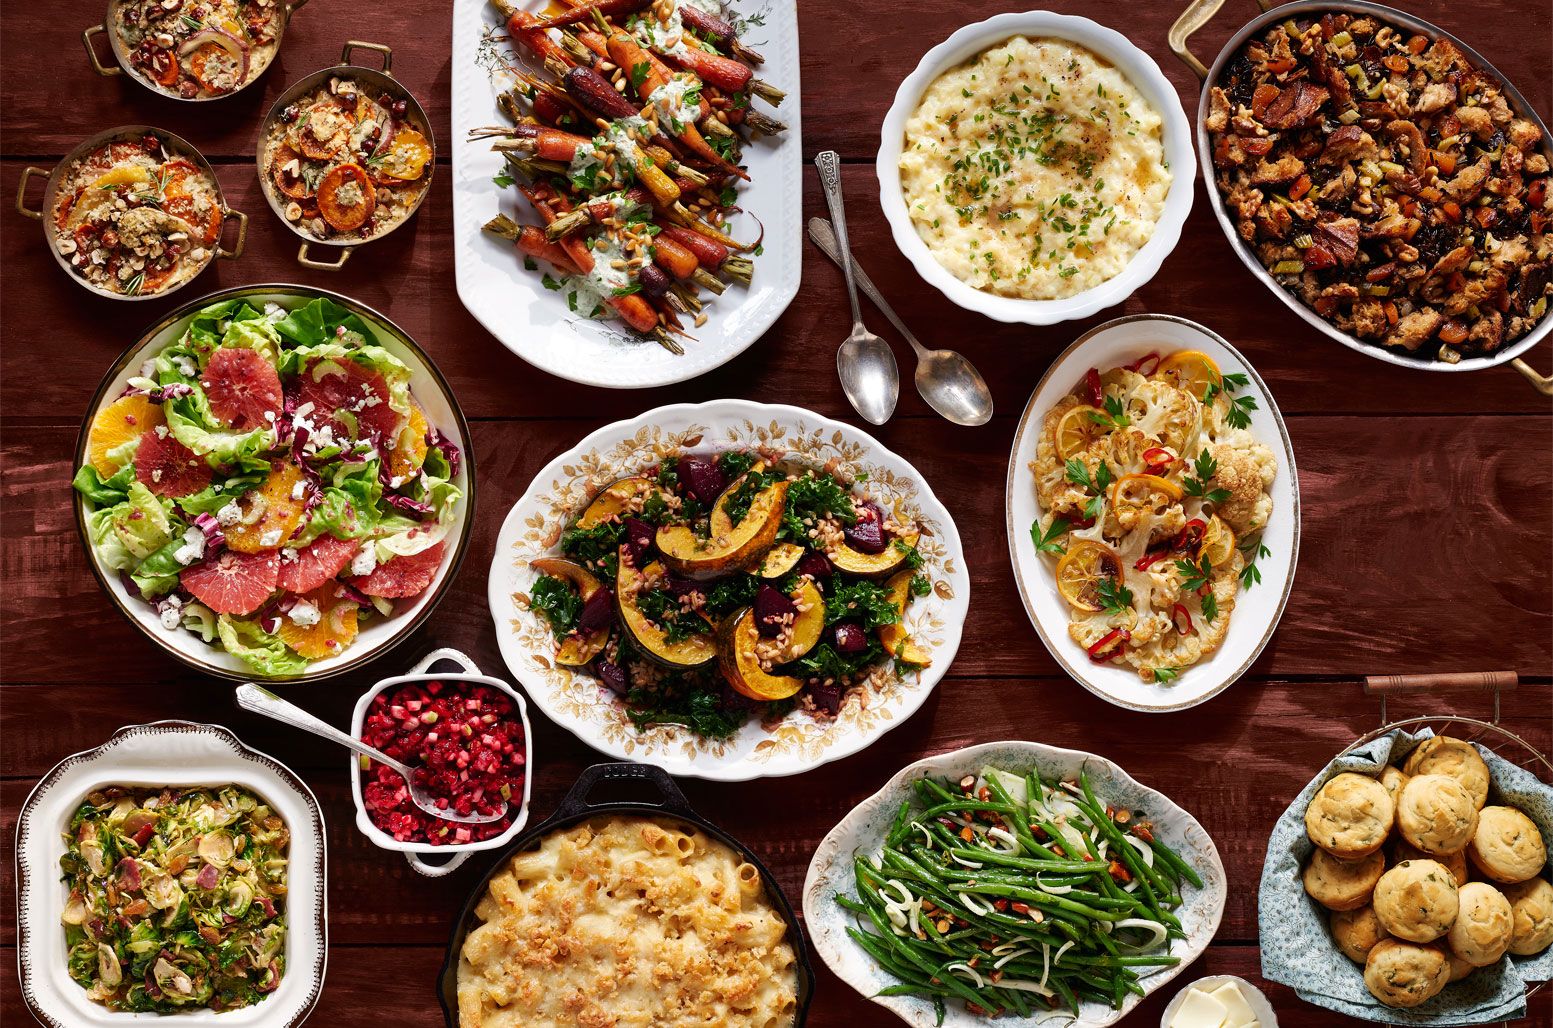 Recipes of dishes. Американская еда. Турецкий стол меню. Hot dishes меню. Американская еда традиционная.